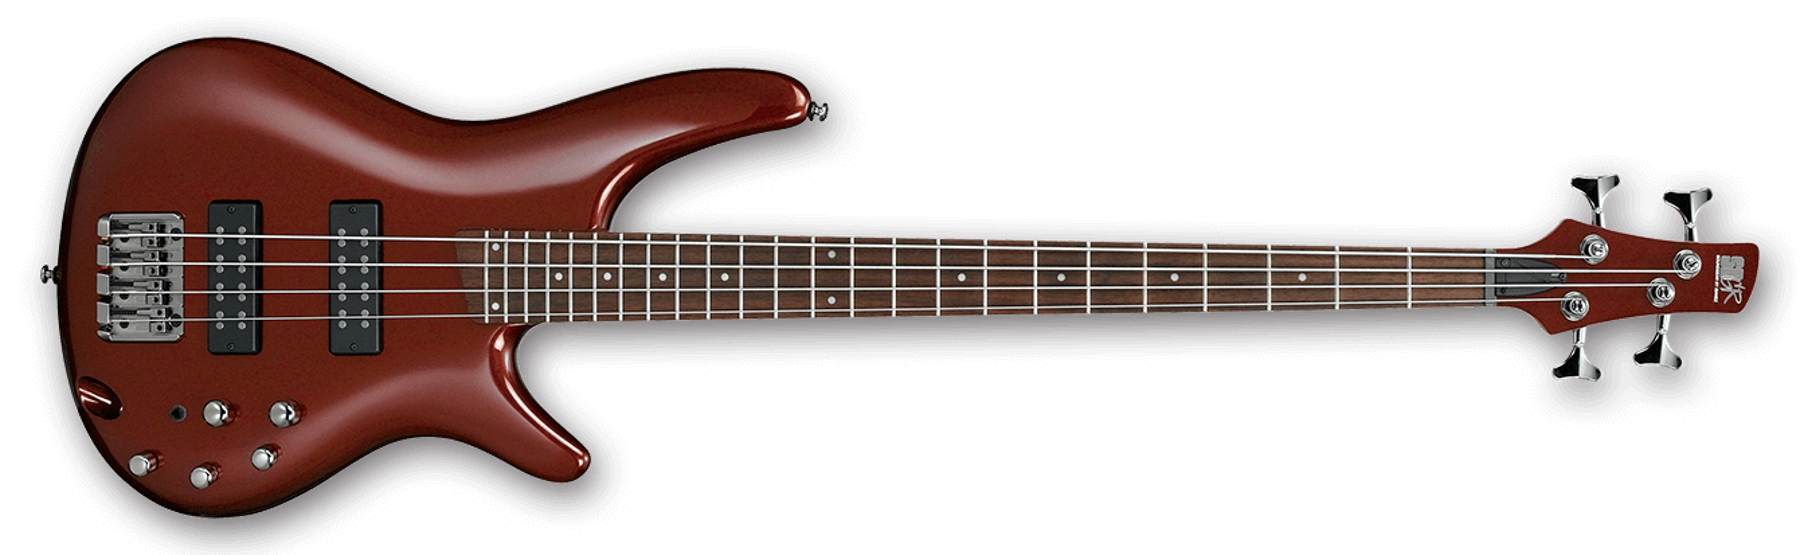 Ibanez SR300E Bass Guitar, 4 String - Golden Veil Matte for sale